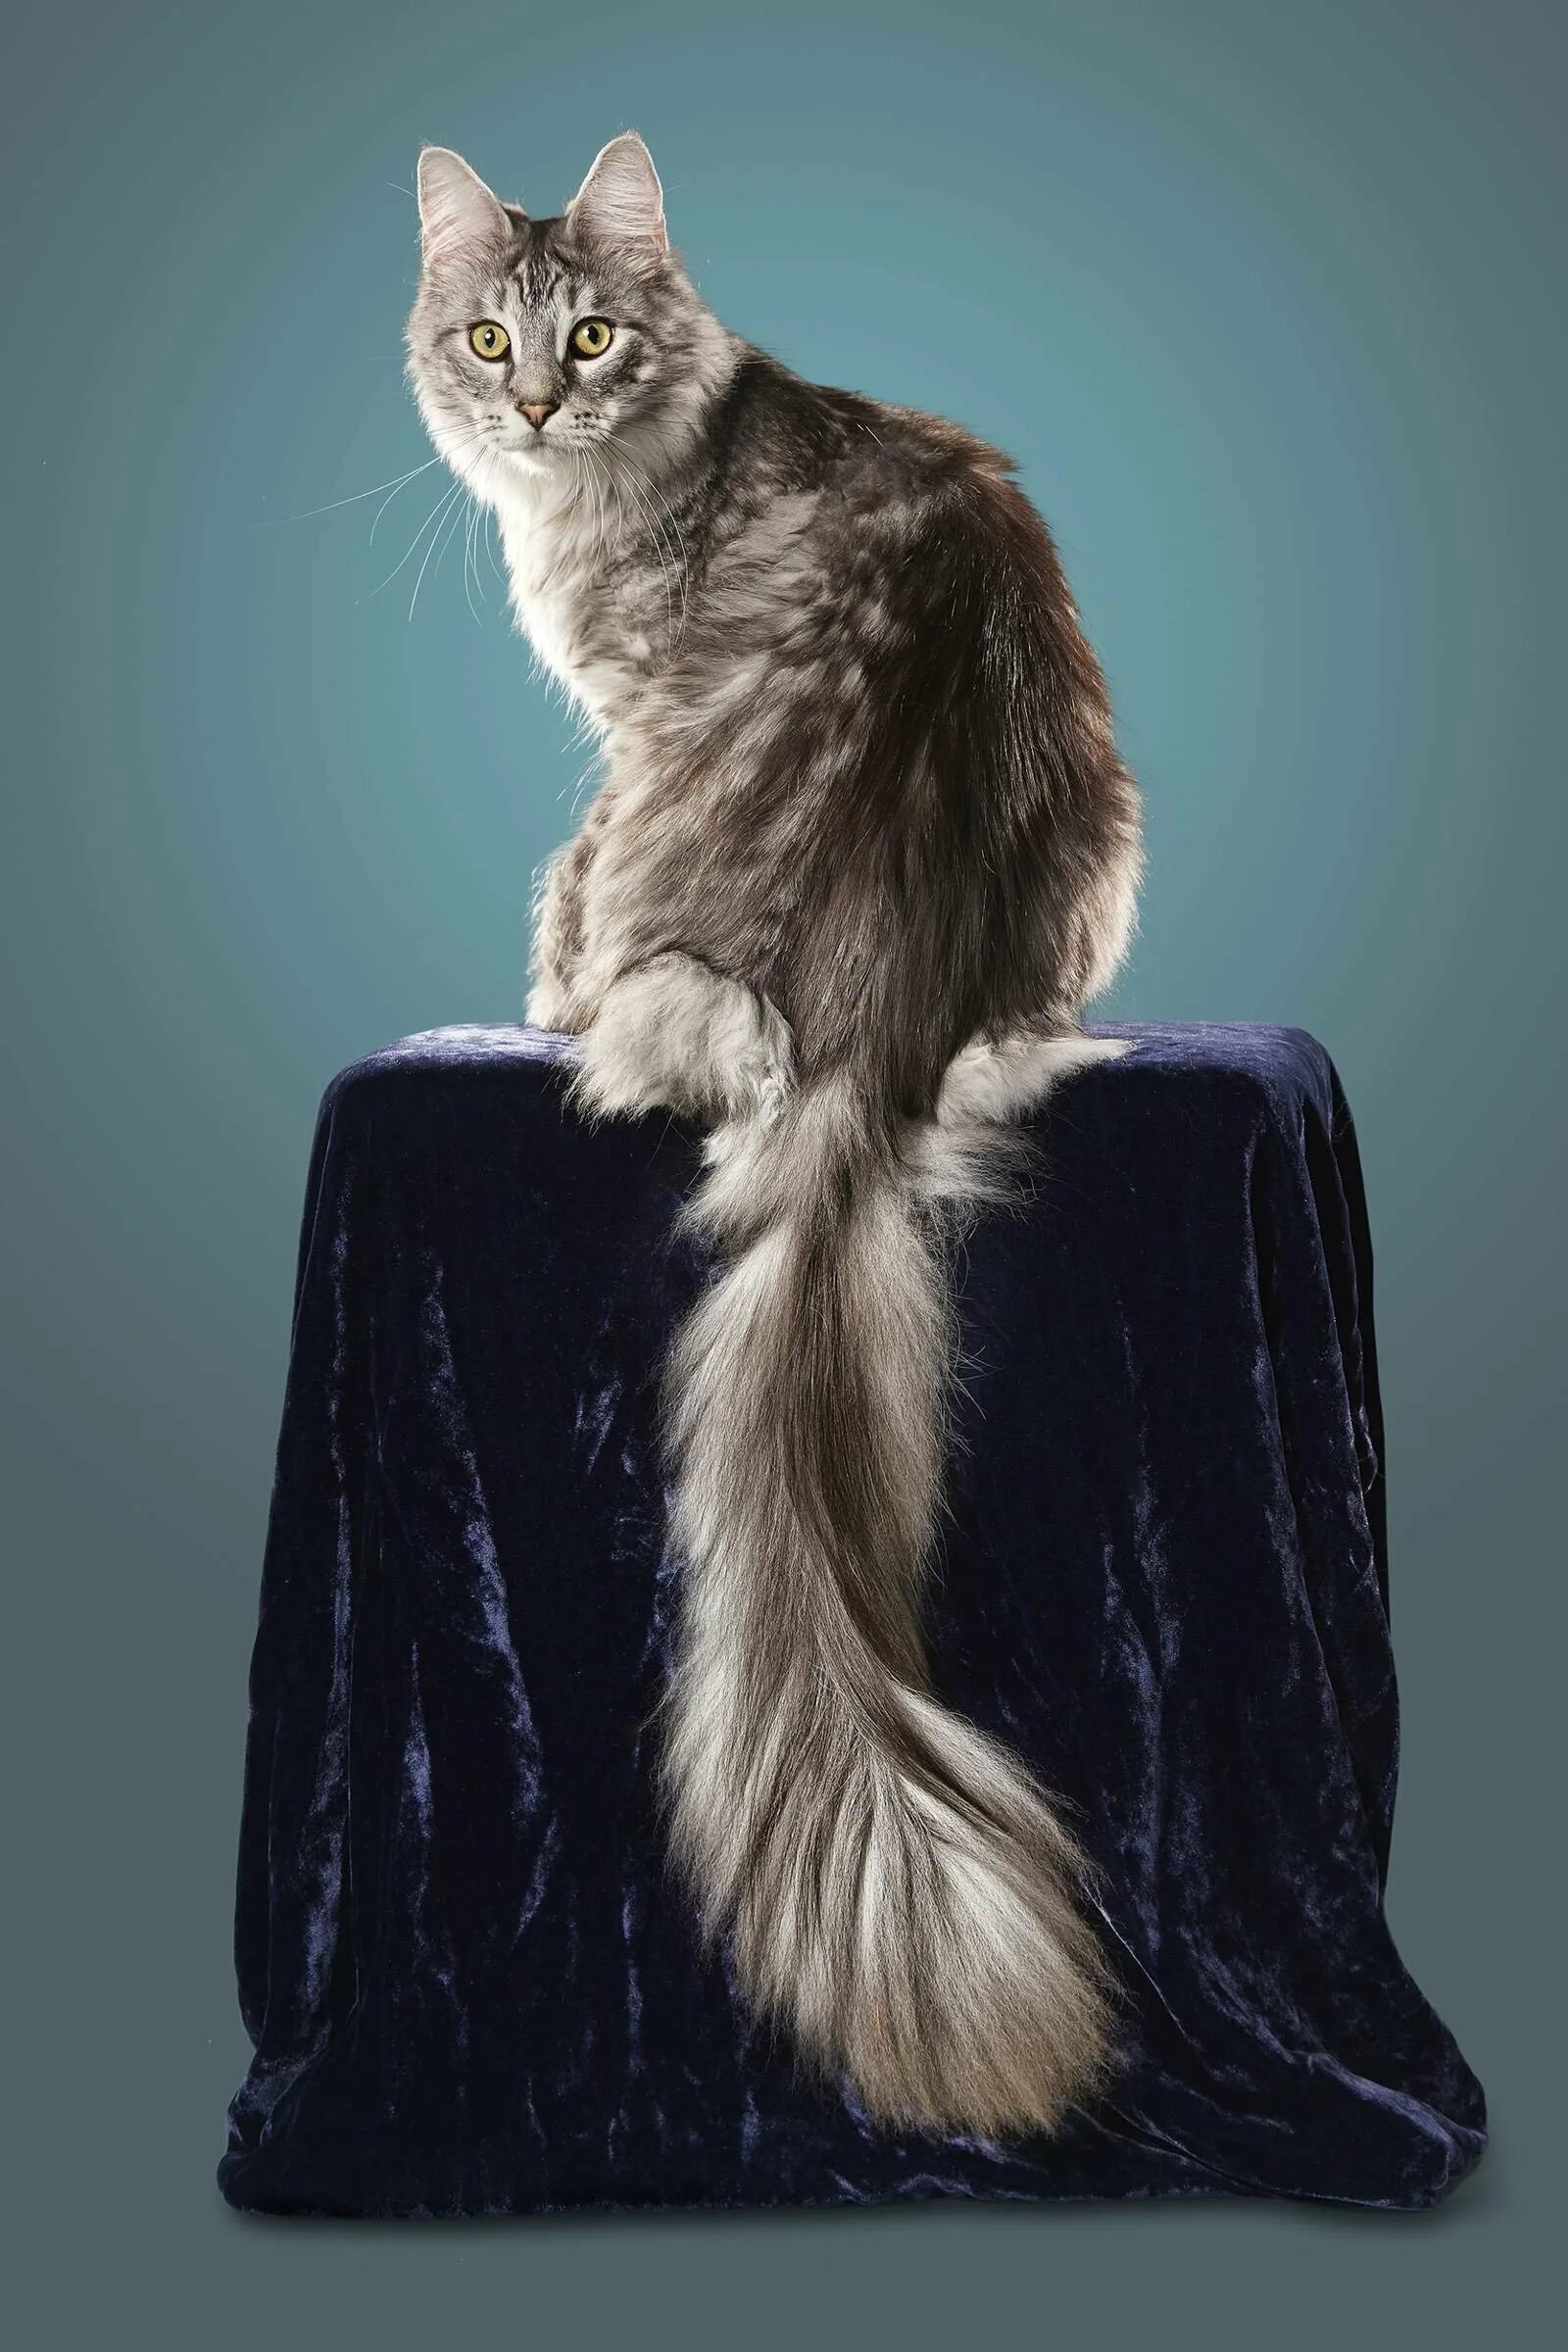 Мейн-кун. Кот Сигнус с самым длинным хвостом. Сигнус кот порода. Хвост Мейн куна. Порода с длинными хвостами